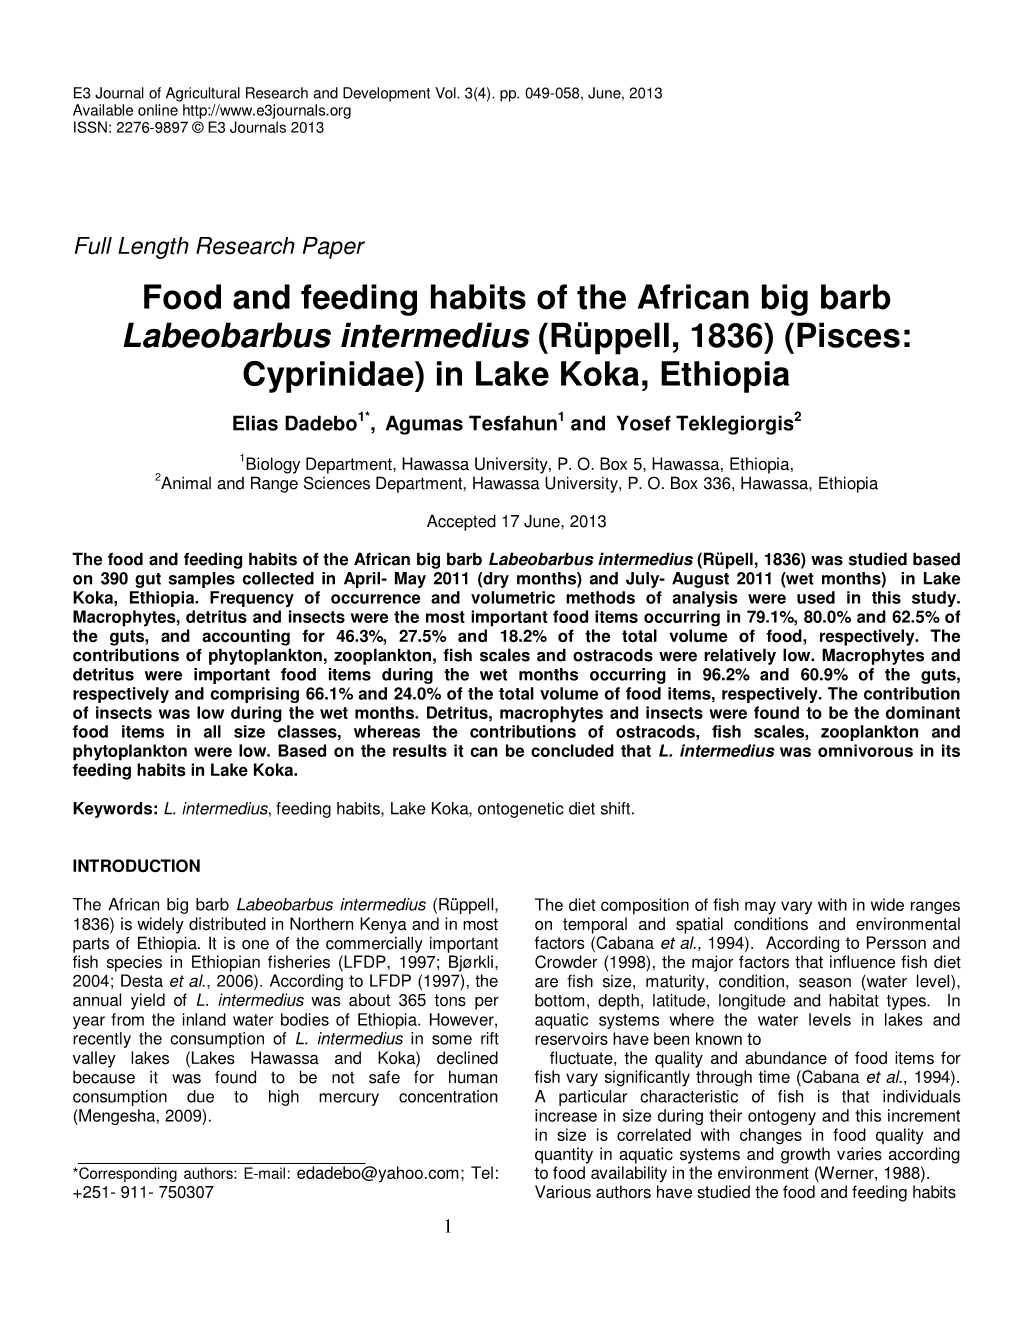 Food and Feeding Habits of the African Big Barb Labeobarbus Intermedius (Rüppell, 1836) (Pisces: Cyprinidae) in Lake Koka, Ethiopia